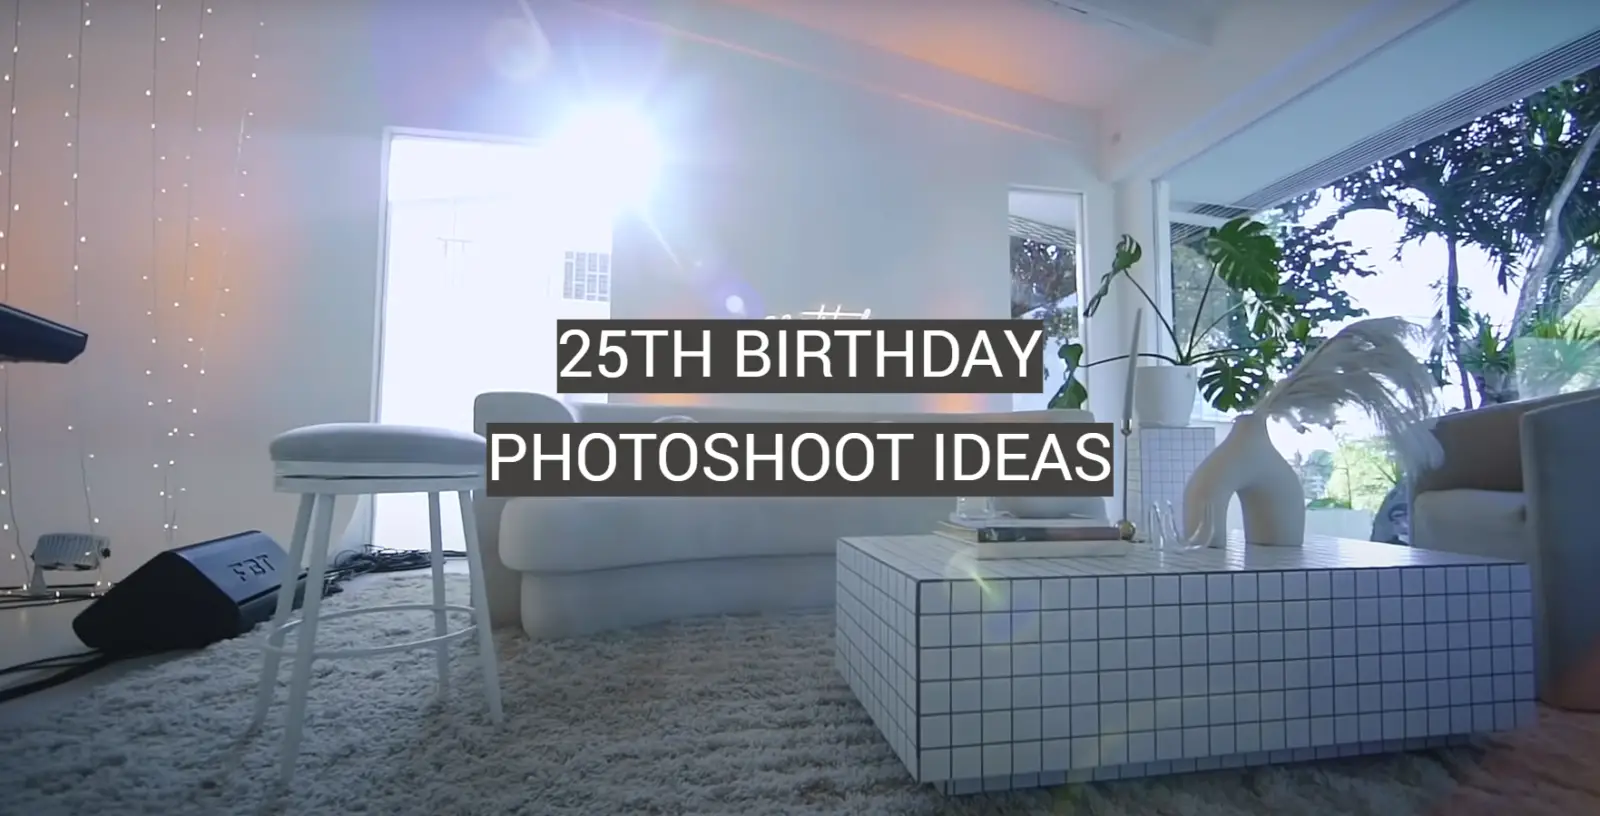 25th Birthday Photoshoot Ideas